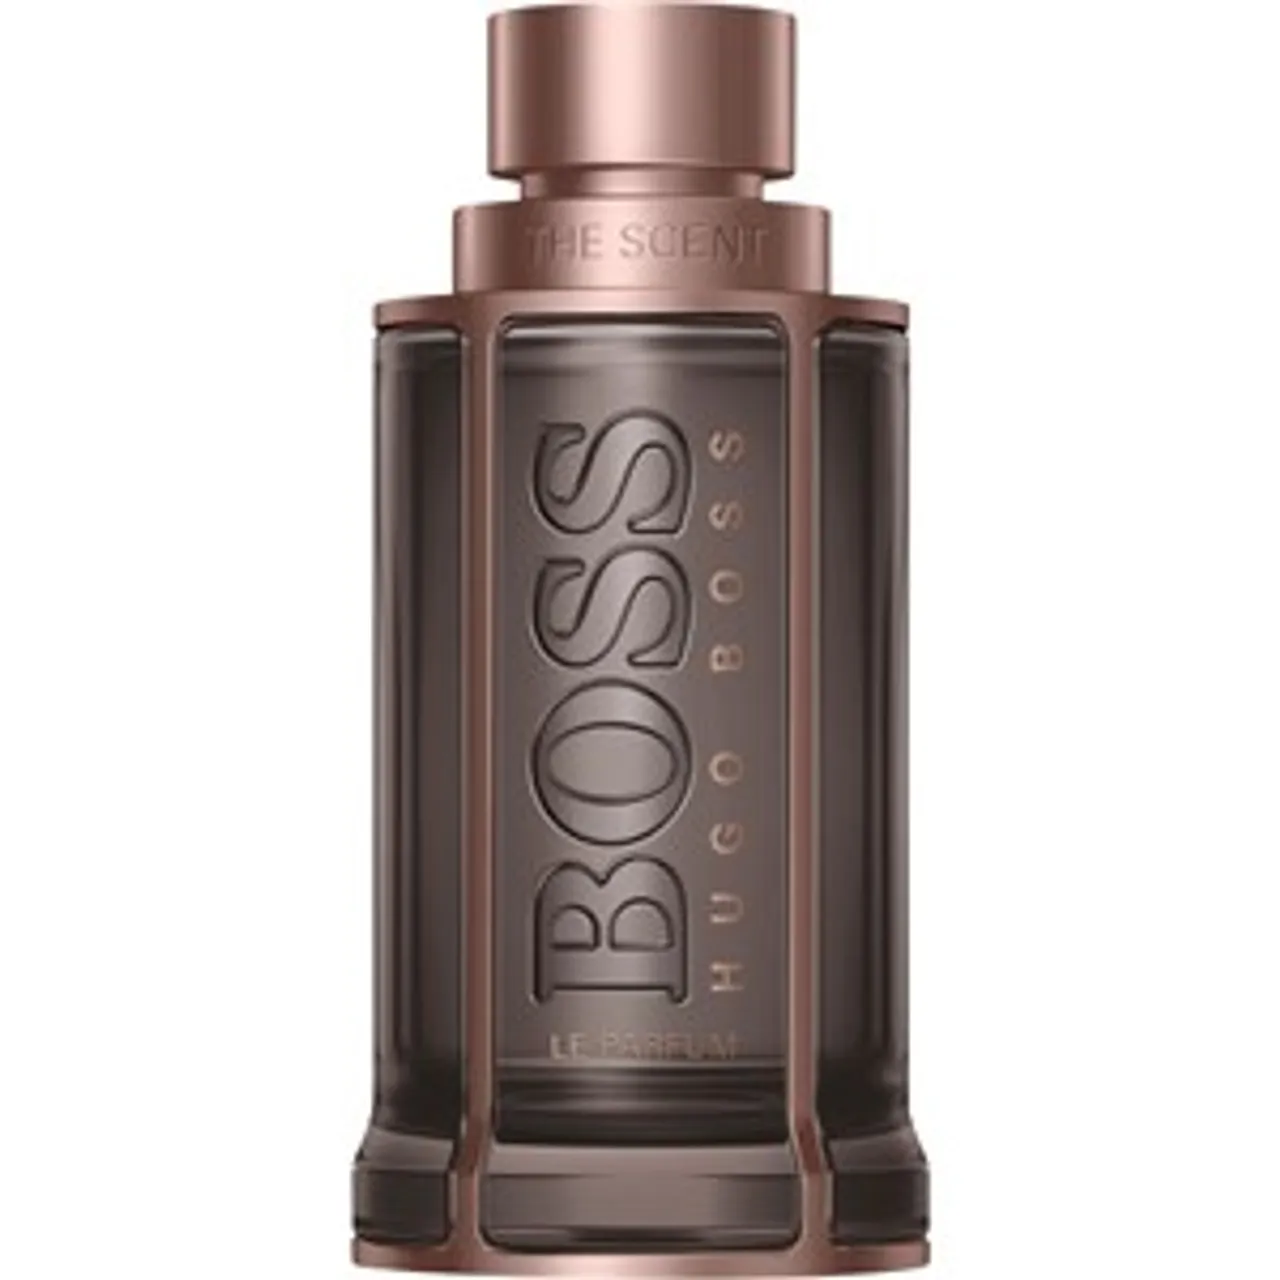 Hugo Boss Le Parfum 1 100 ml